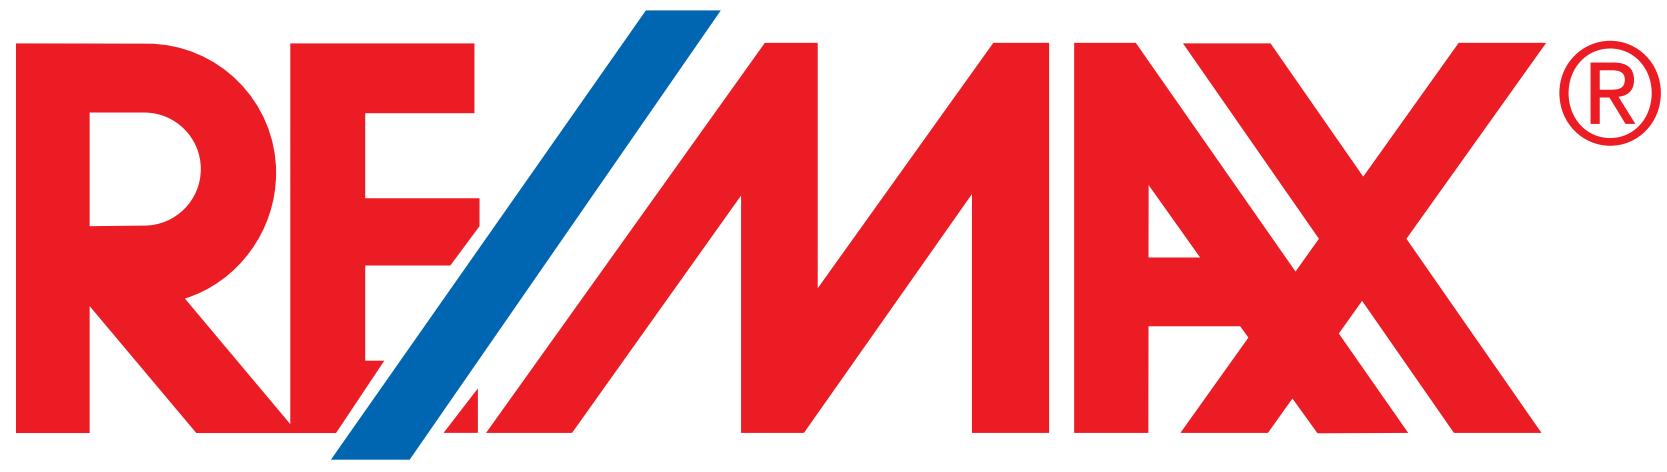 Remax Logo png